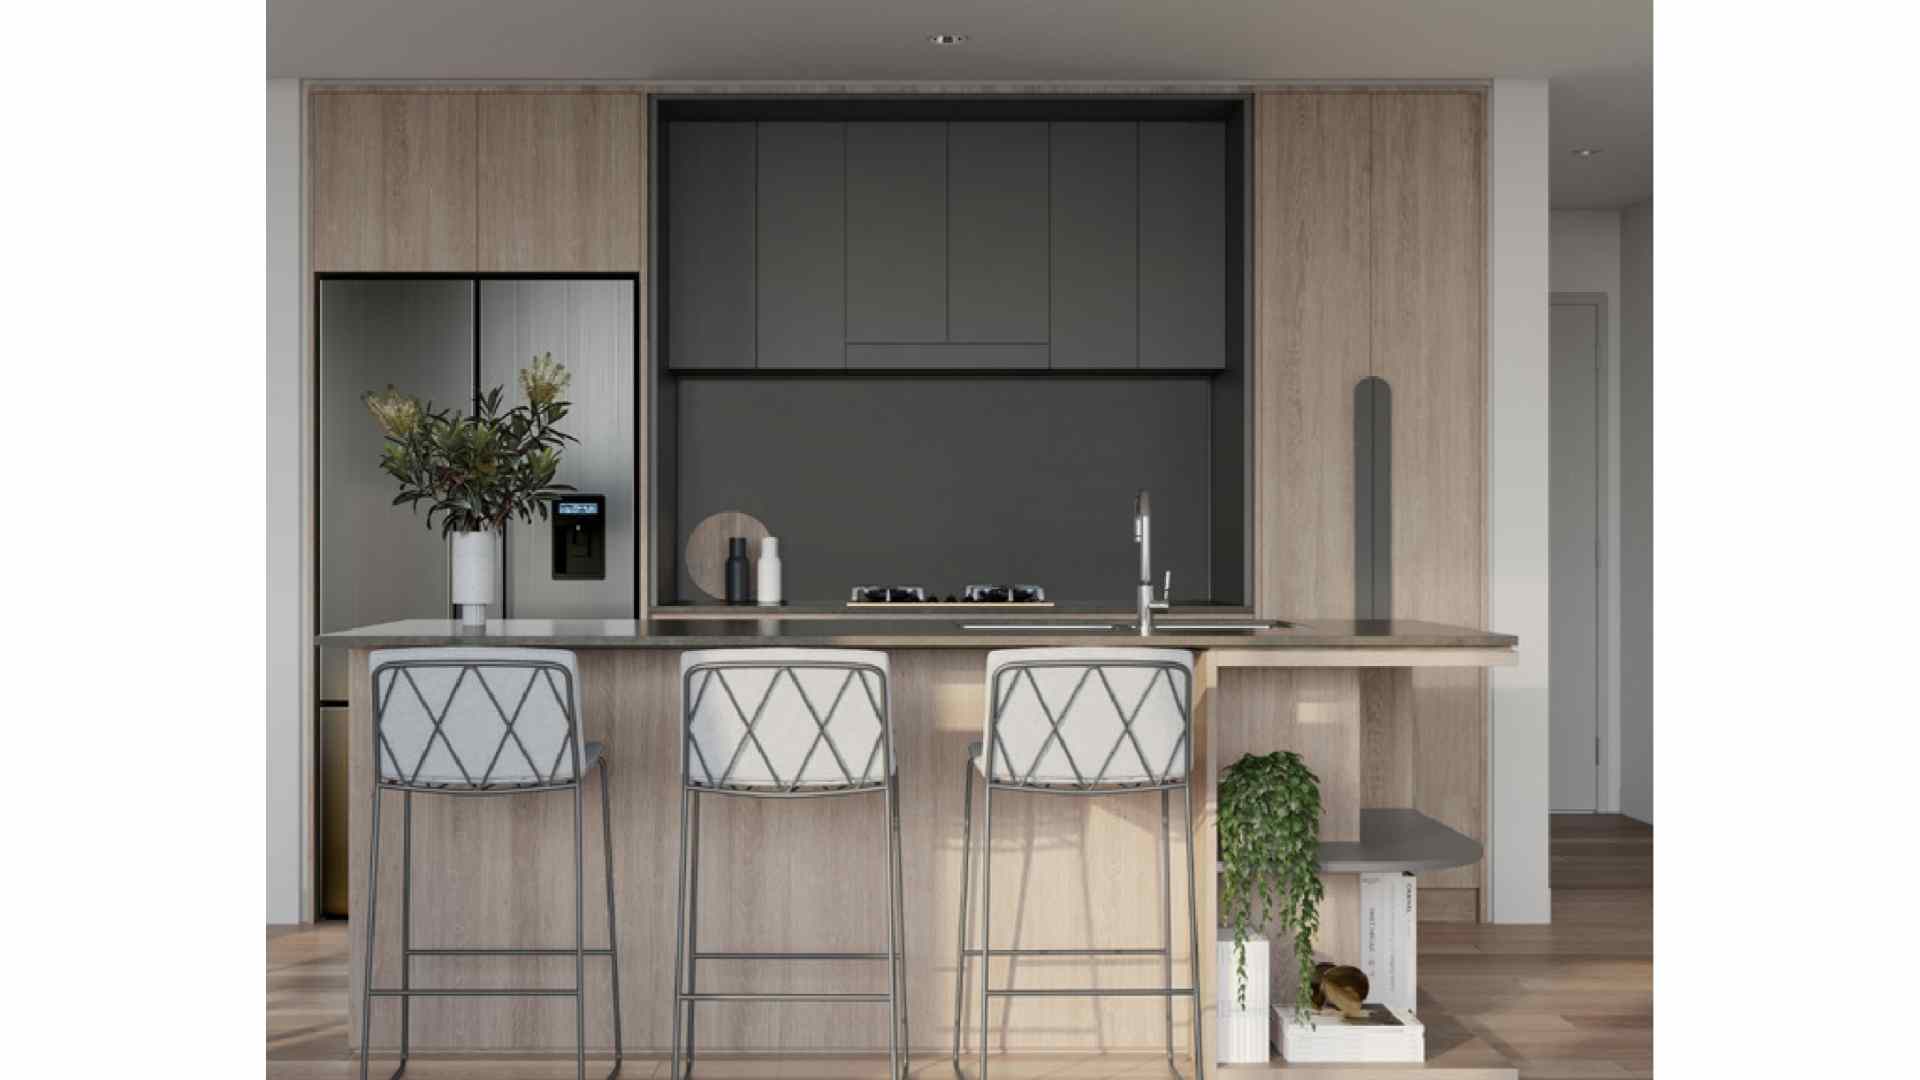 light wood and grey kitchen, 3 bar stools